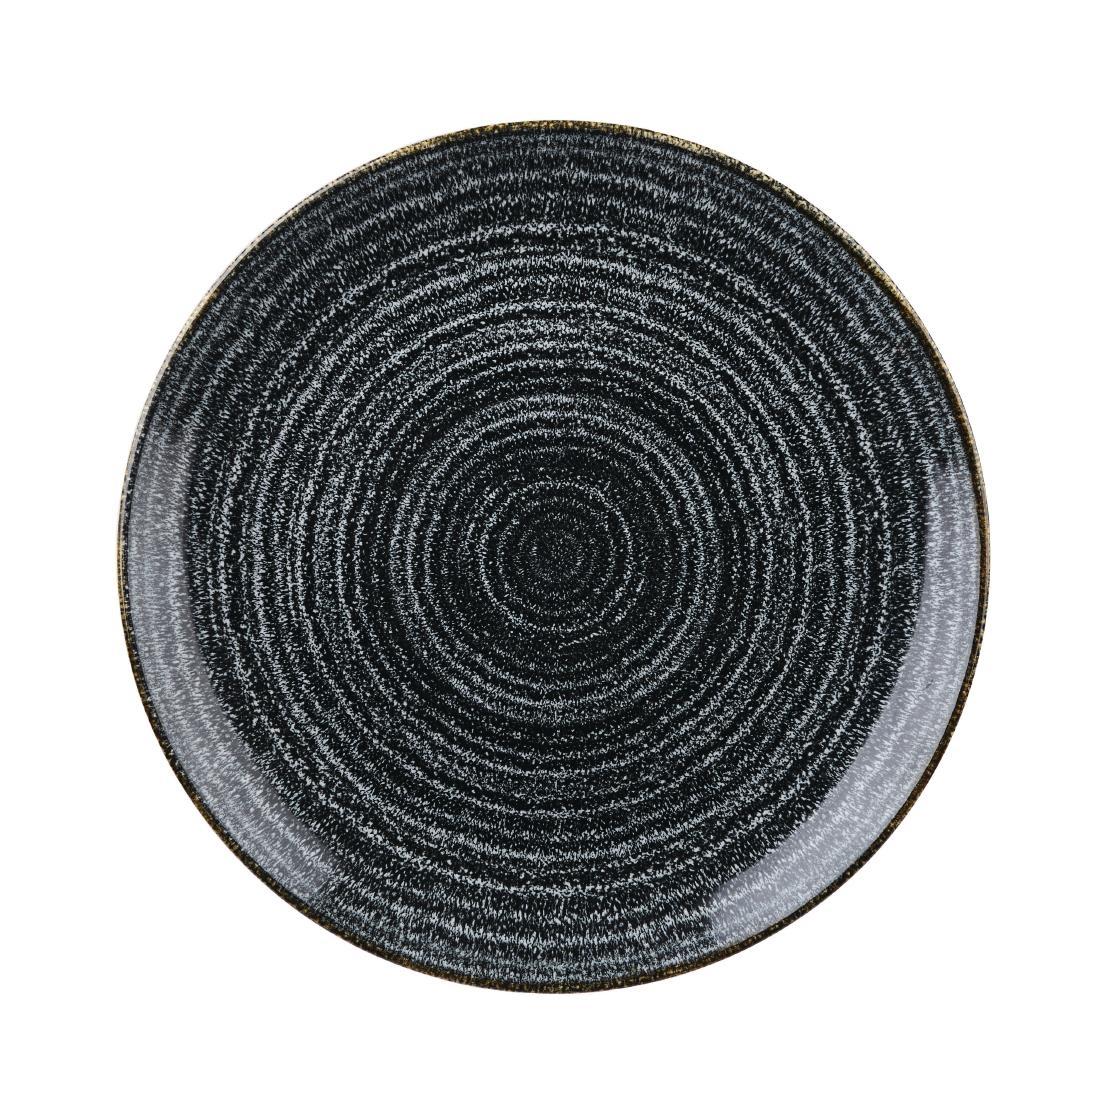 Churchill Studio Prints Homespun Charcoal Black Coupe Plate 217mm - DA262  - 1